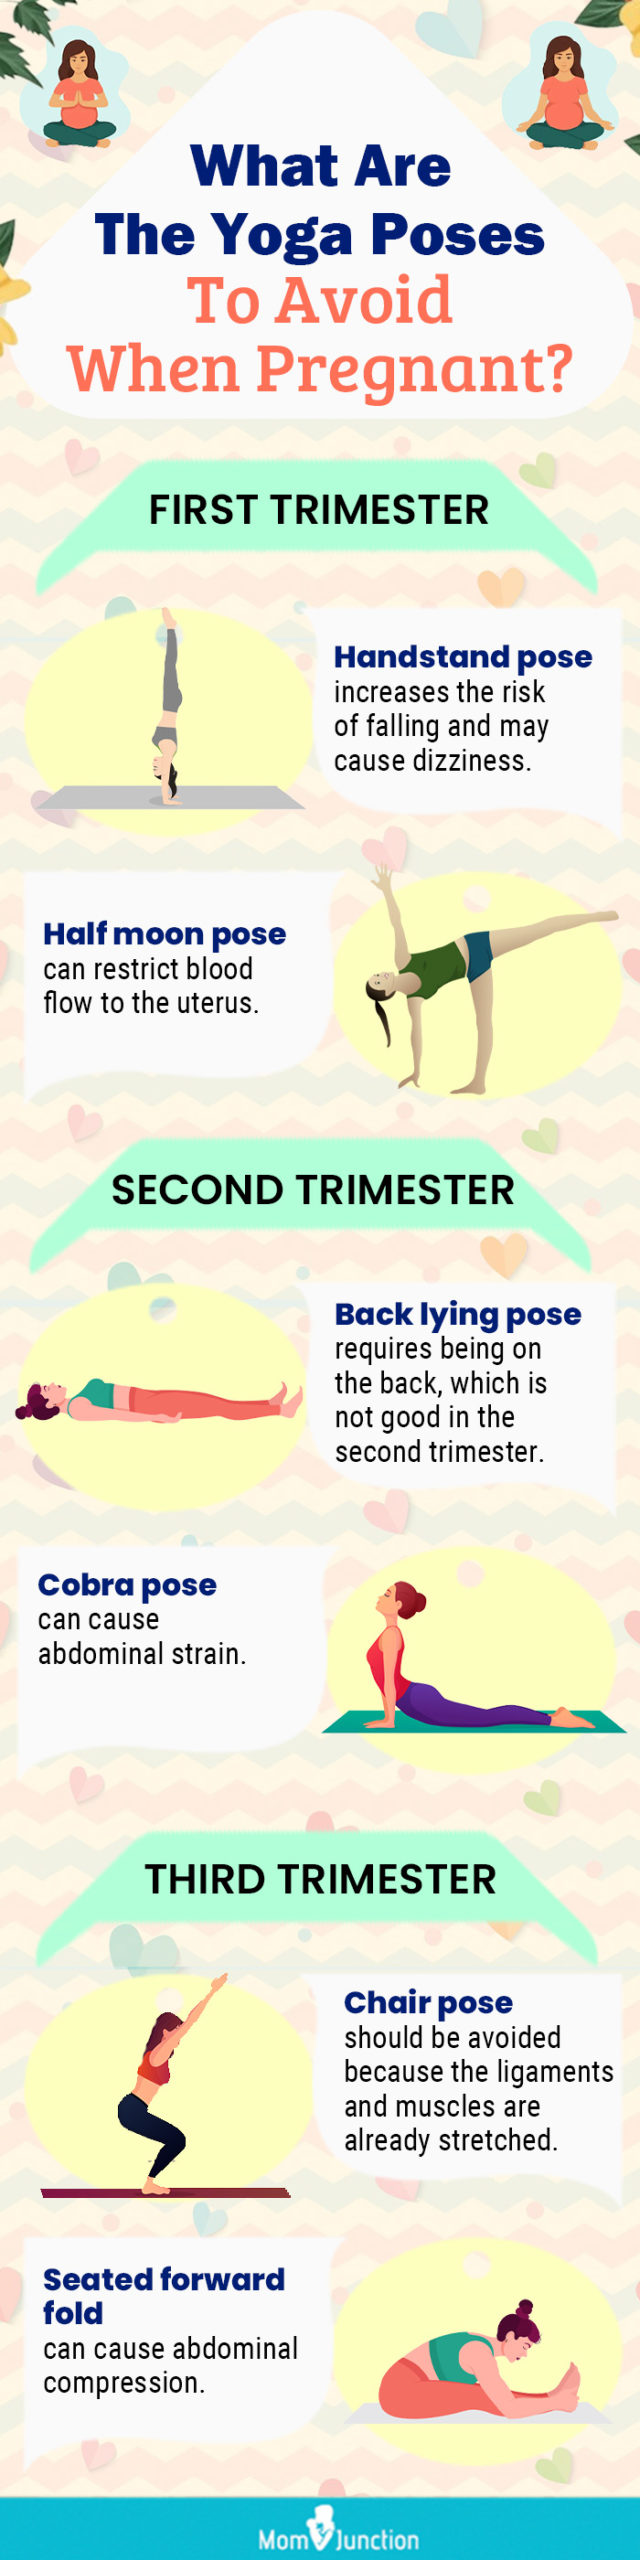 First Trimester Prenatal Yoga